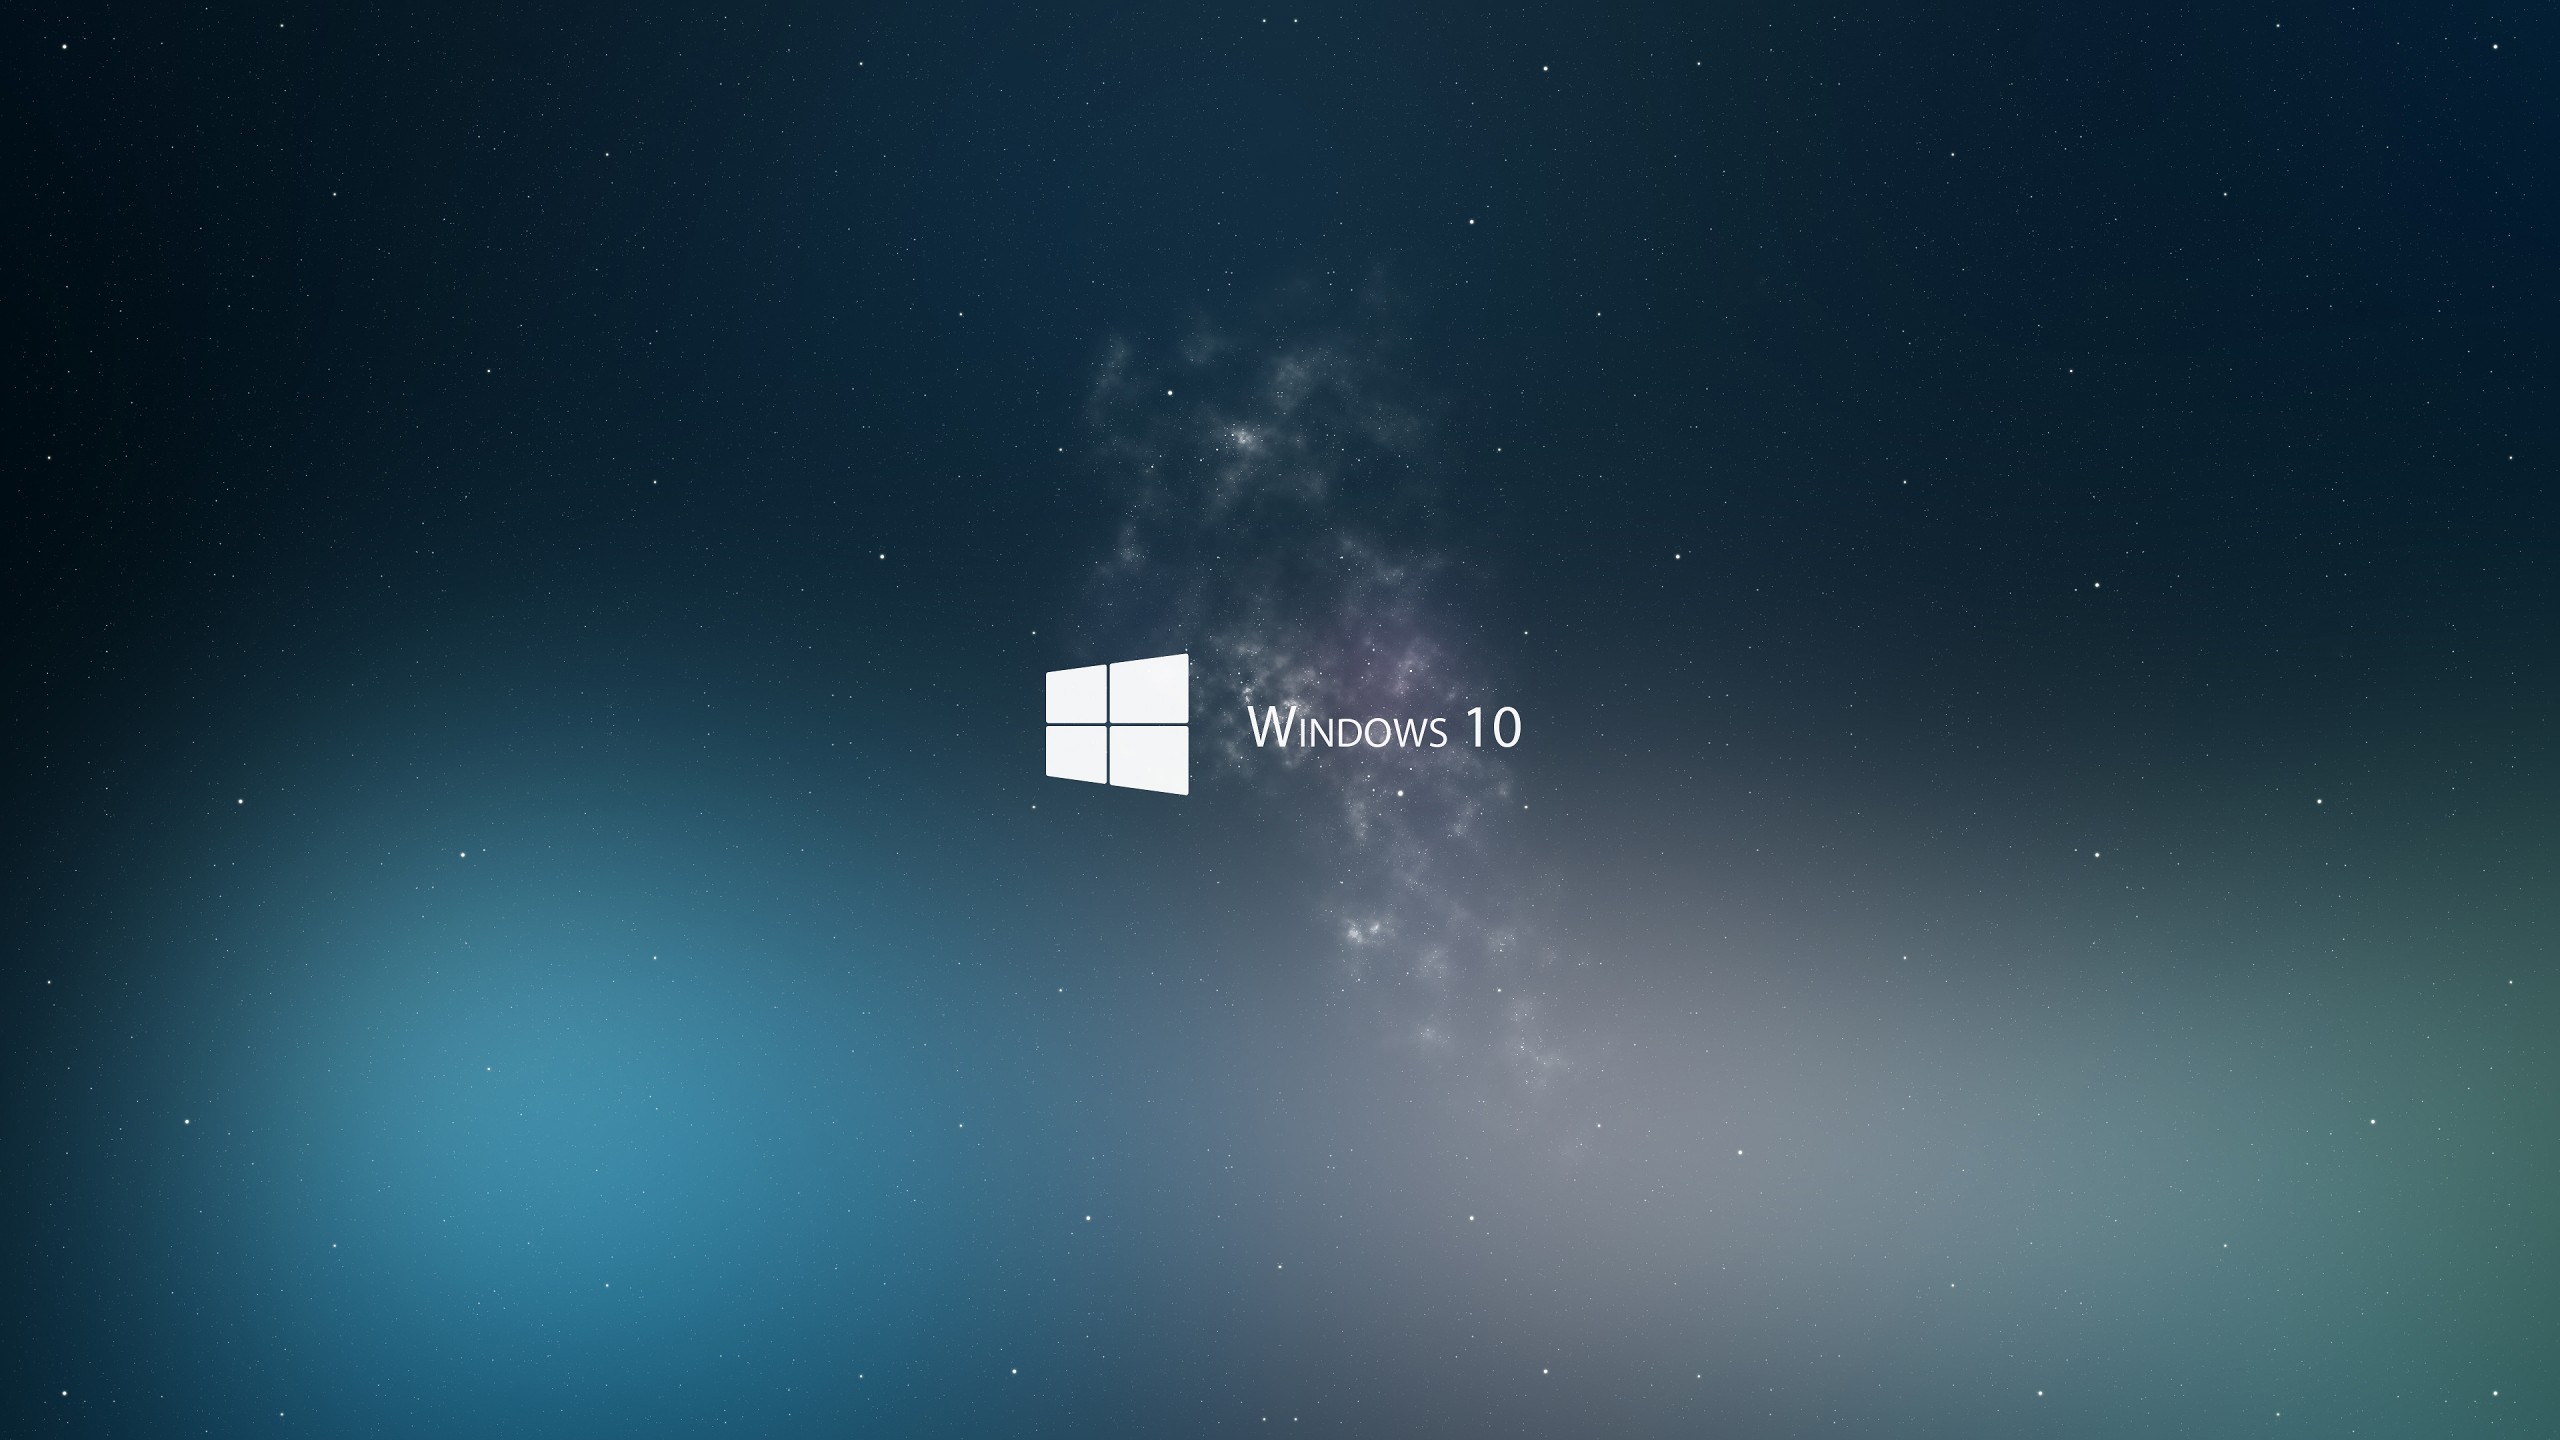 Windows 10 2560 X 1440 Wallpaper - WallpaperSafari